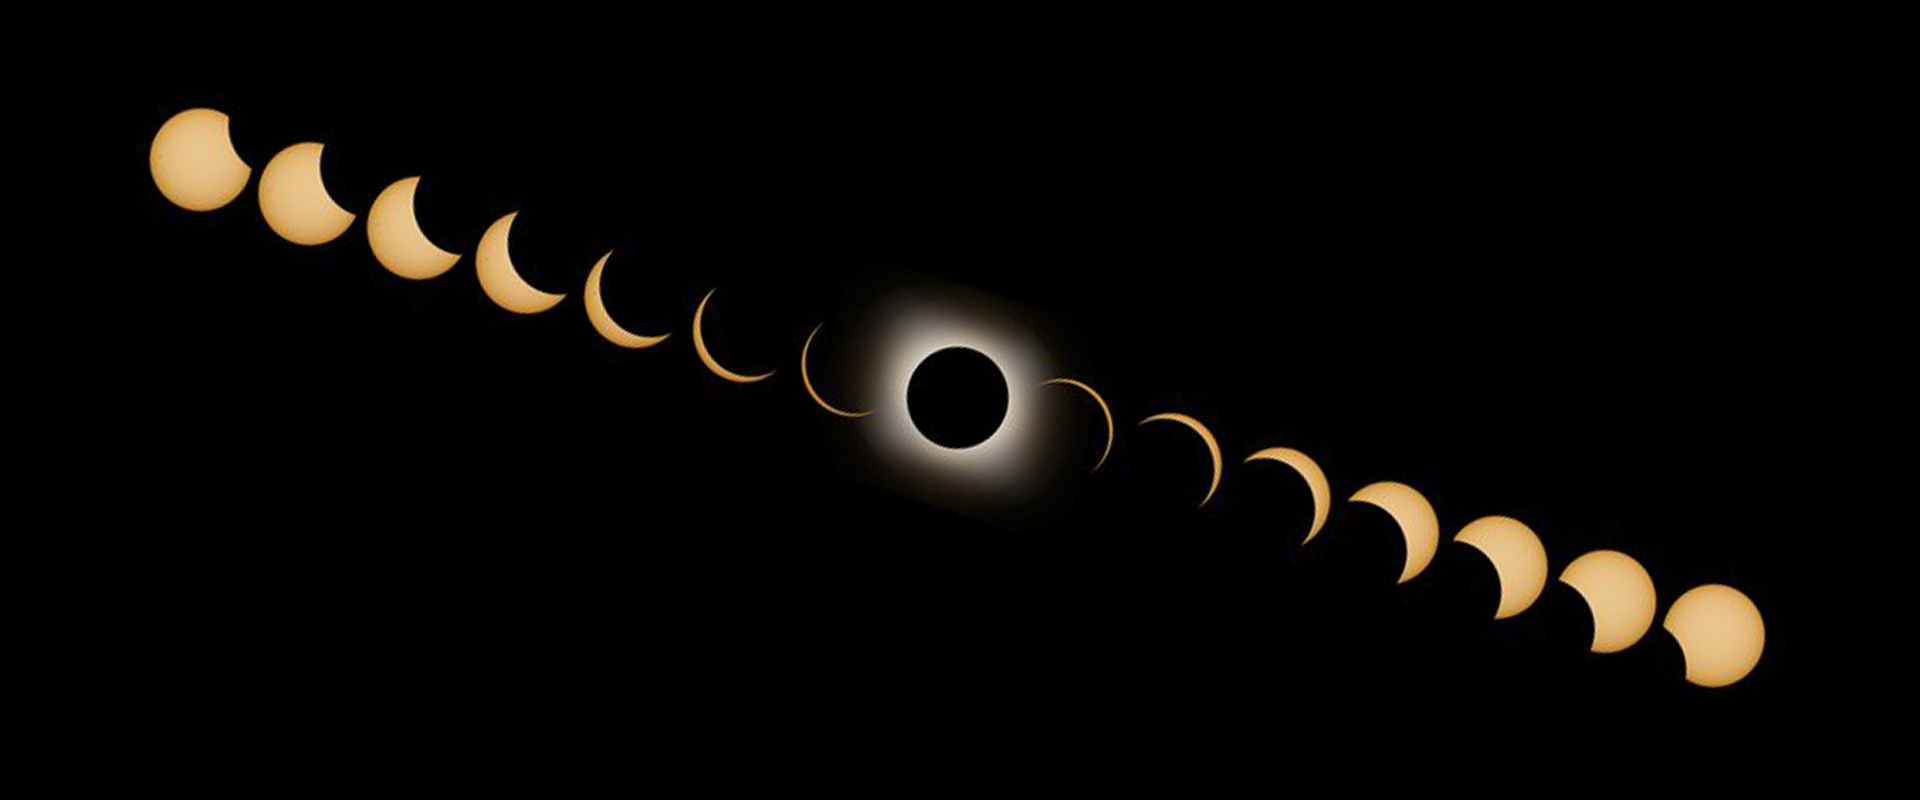 Eclipse Carousel 1.jpg